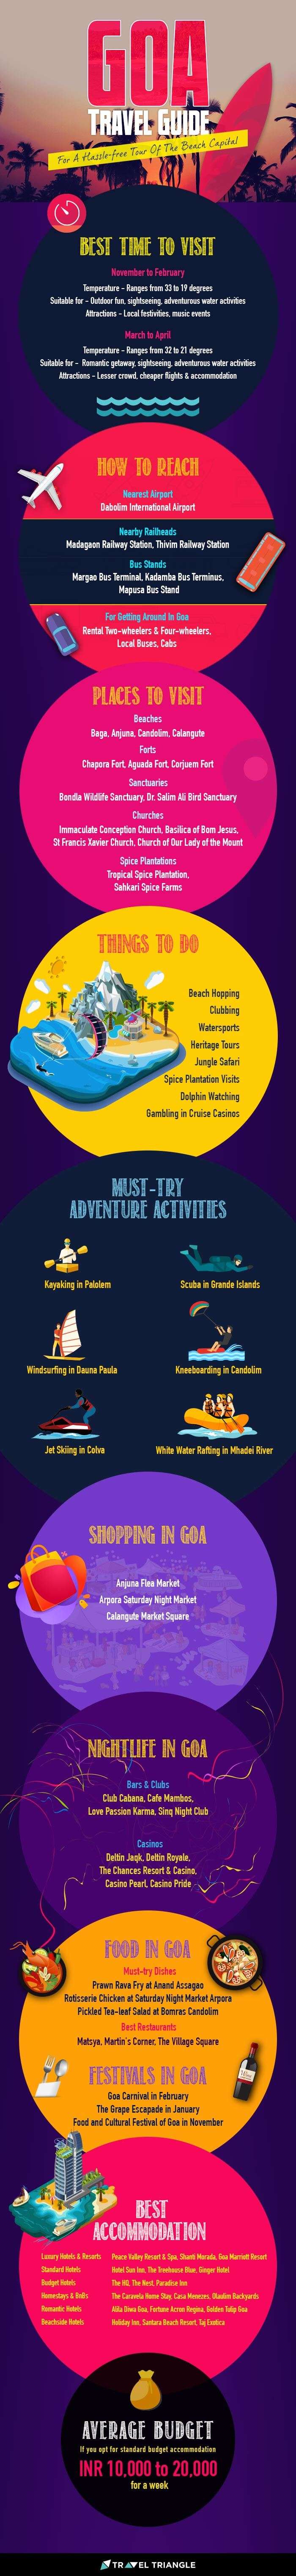 Goa Travel Guide Infographic